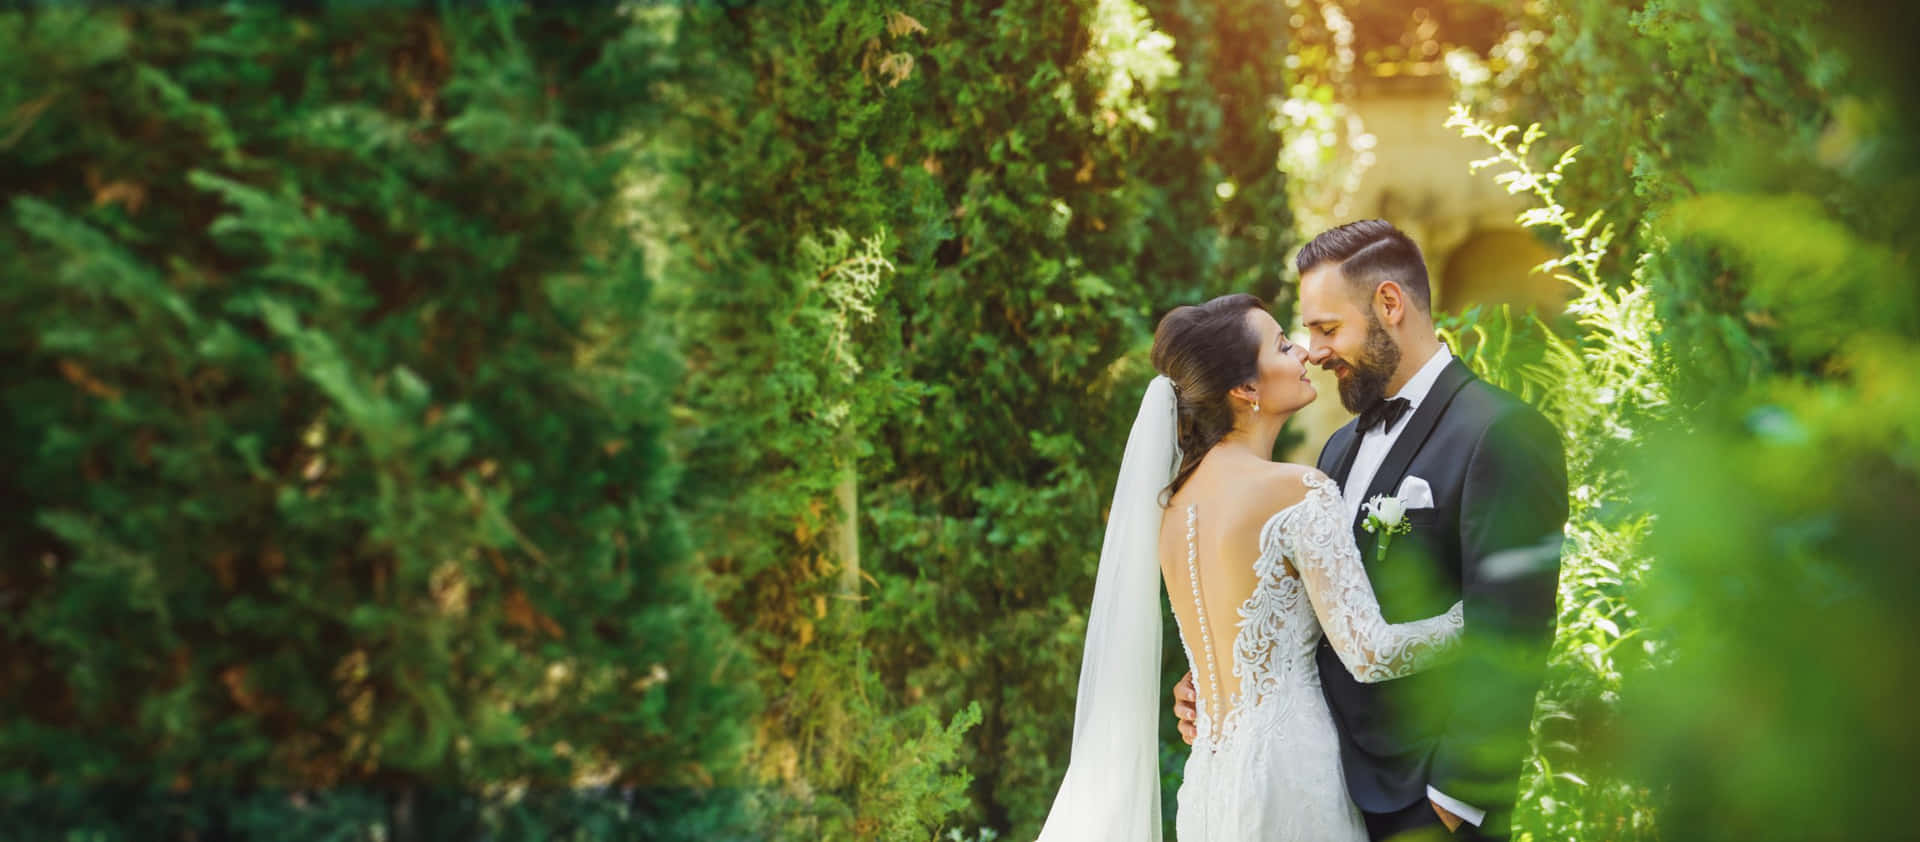 Garden Wedding Bliss: A Romantic Outdoor Ceremony Wallpaper